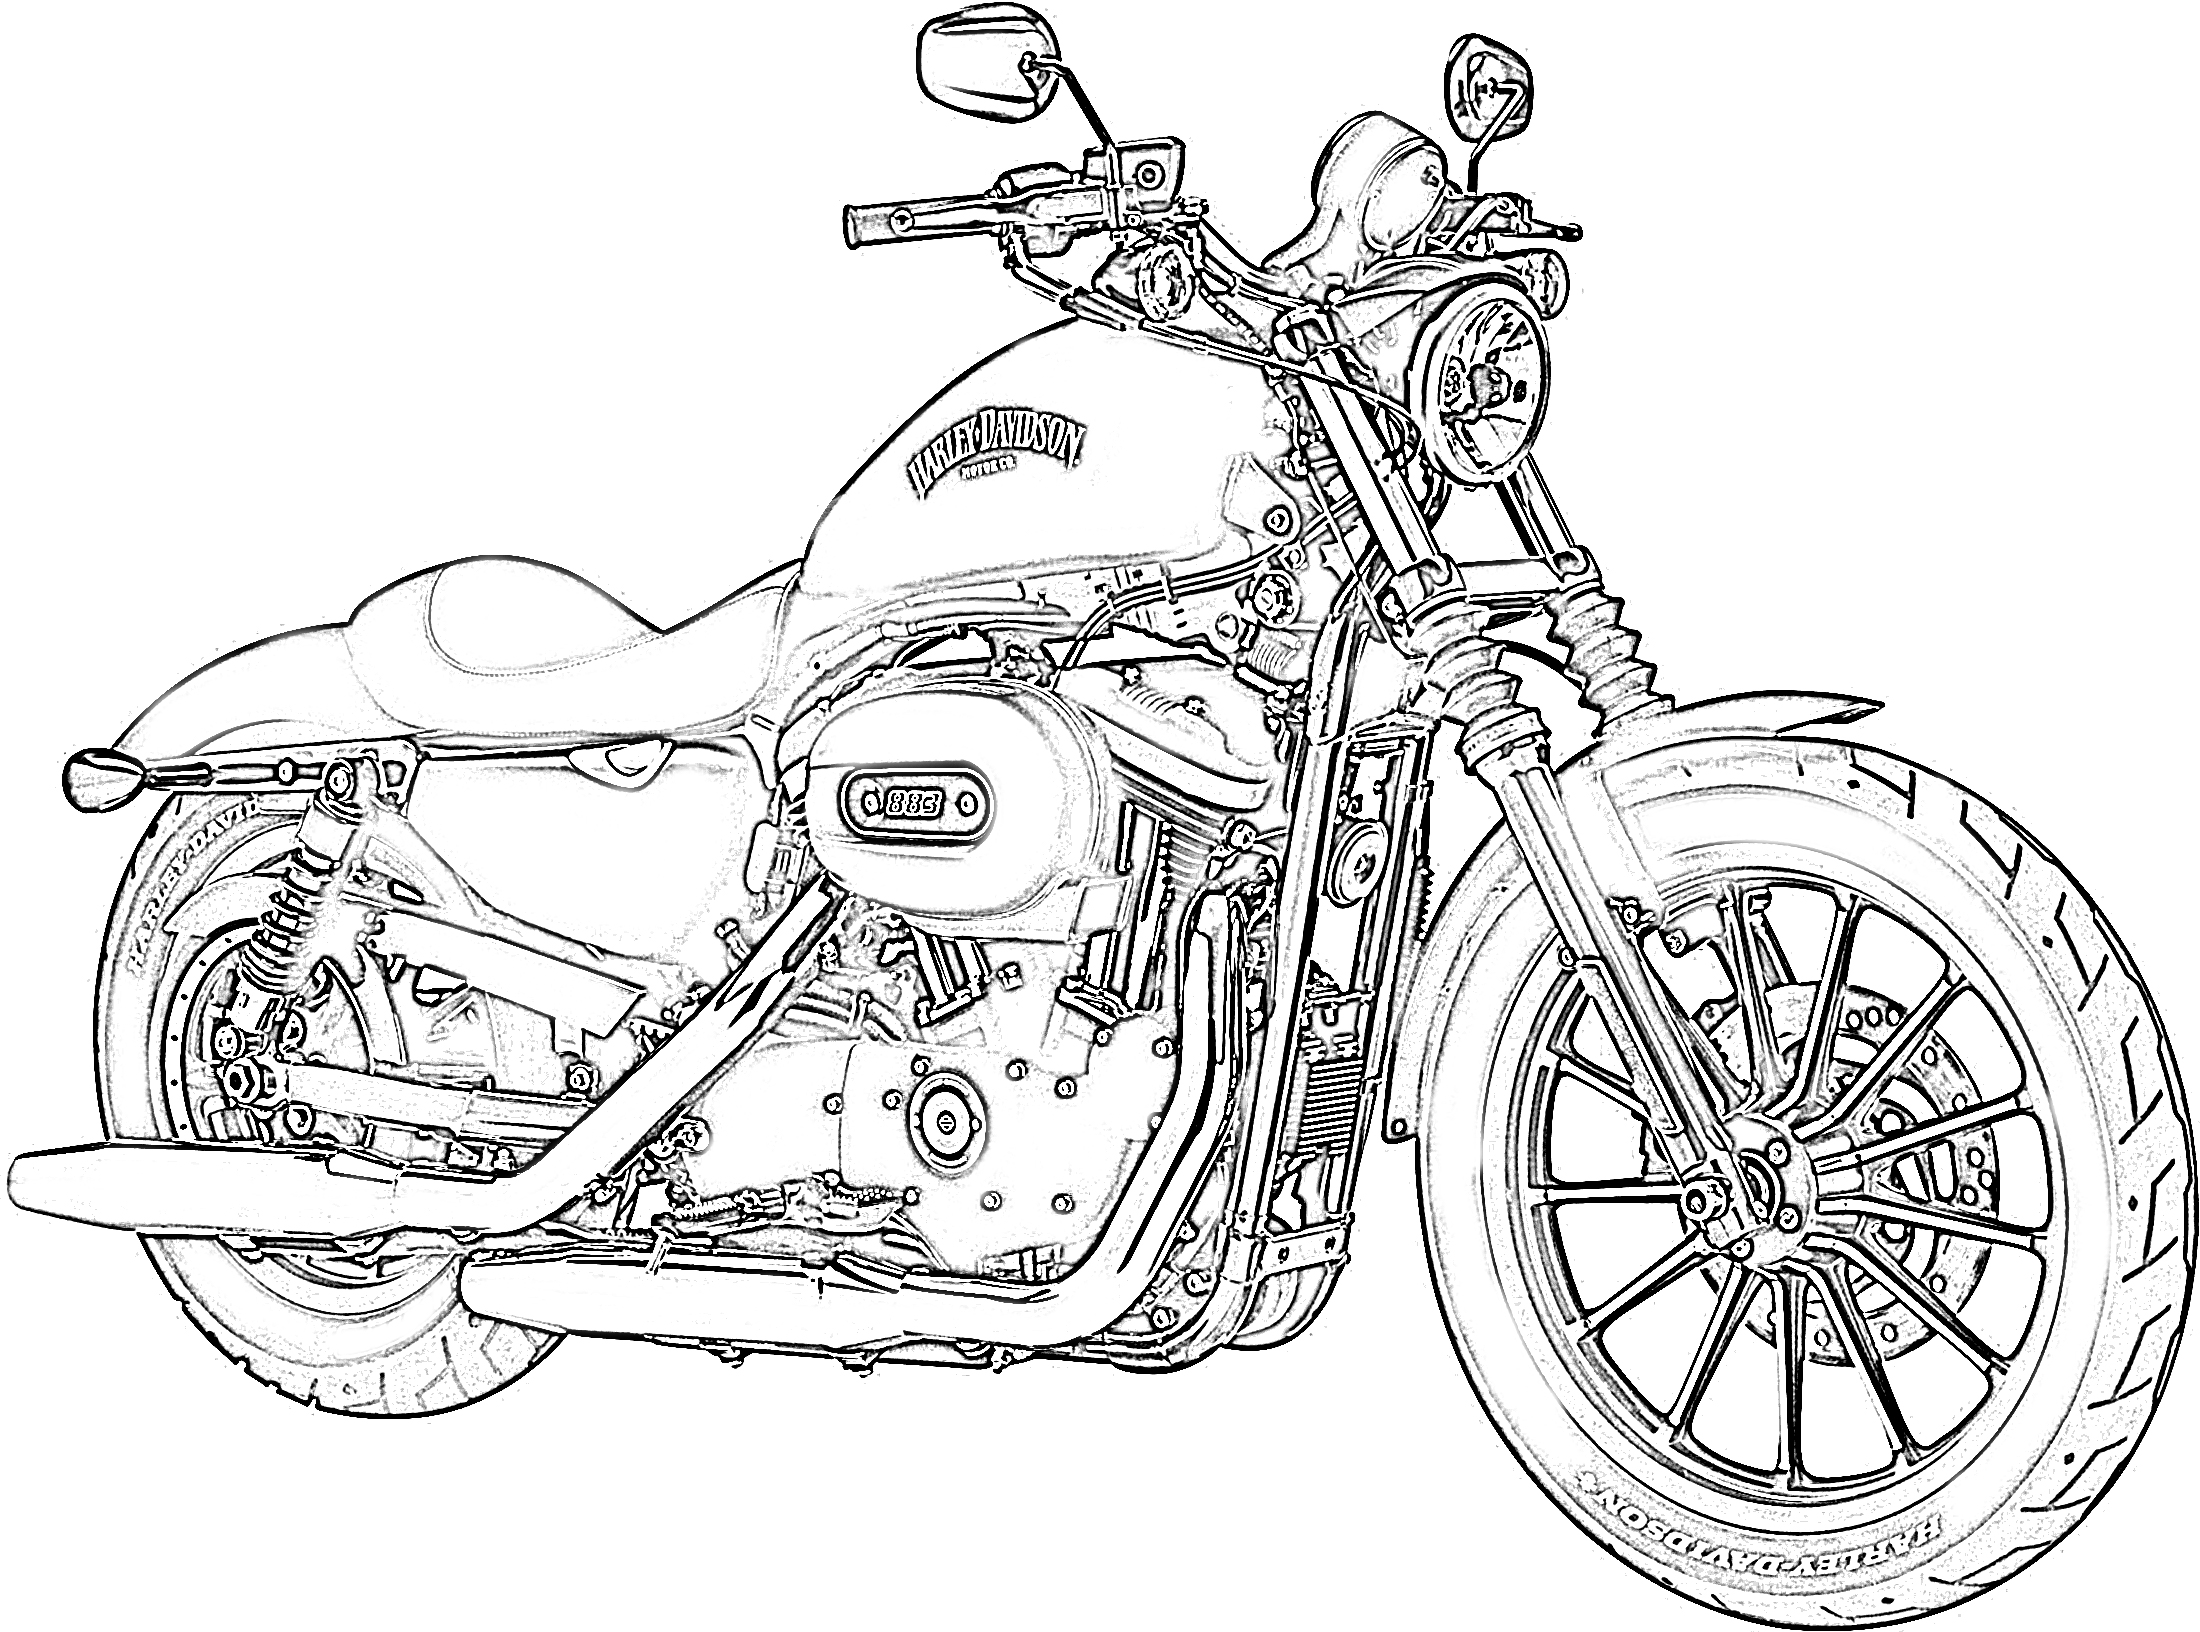 Harley Davidson 88c coloring page